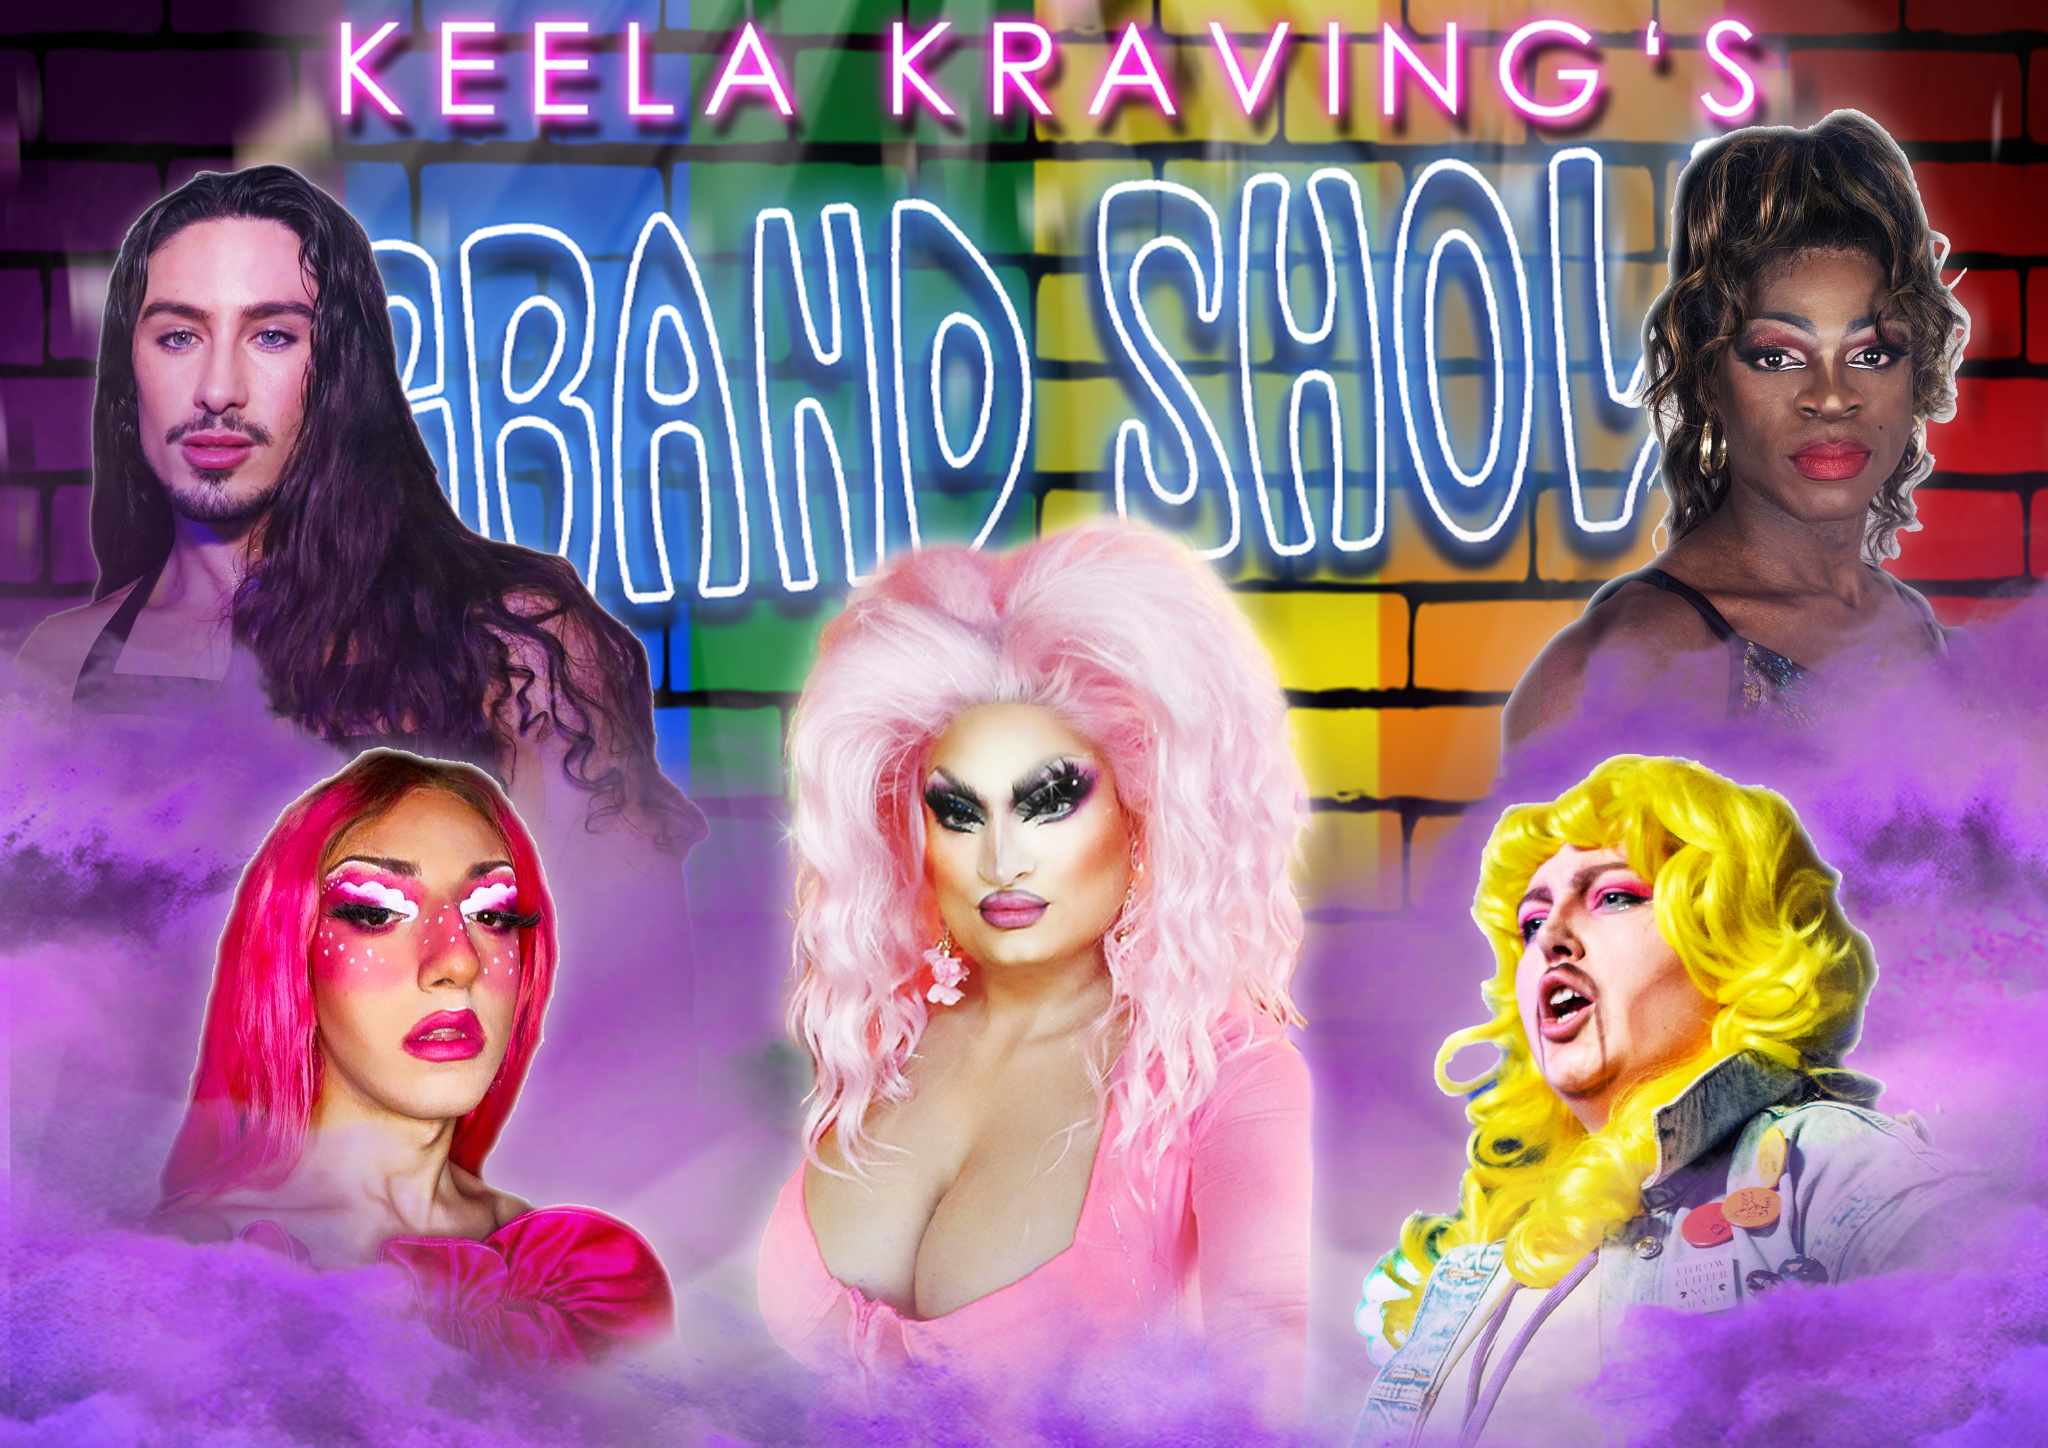 CABARET: Keela Kraving’s Grand Show!